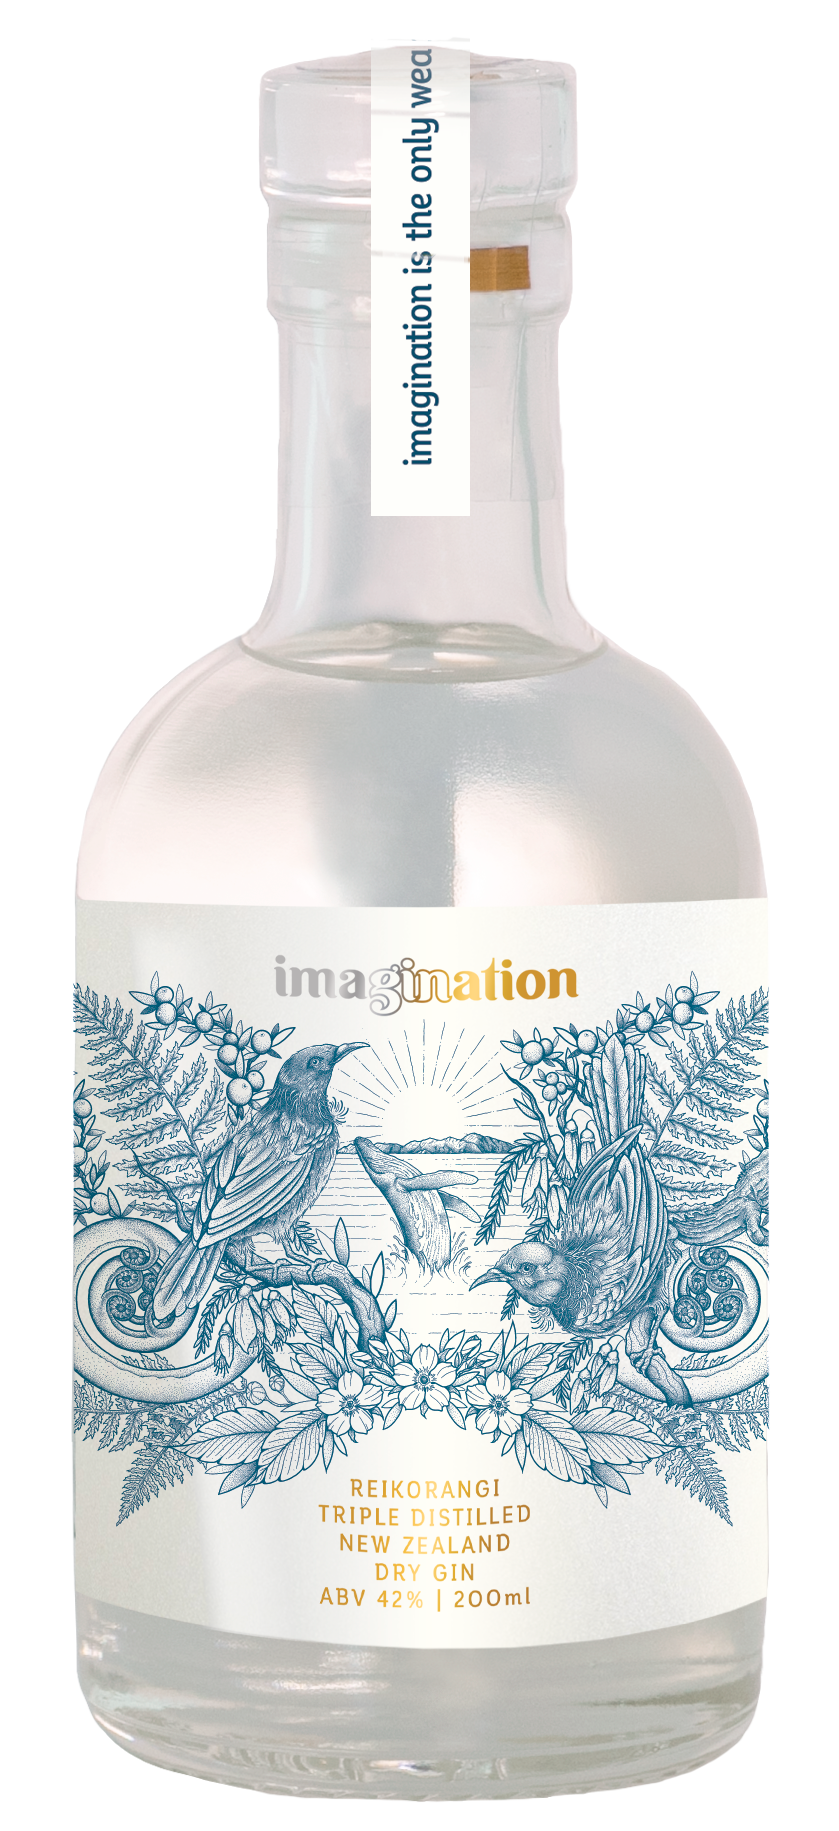 Imagination Reikorangi Triple Distilled Dry Gin